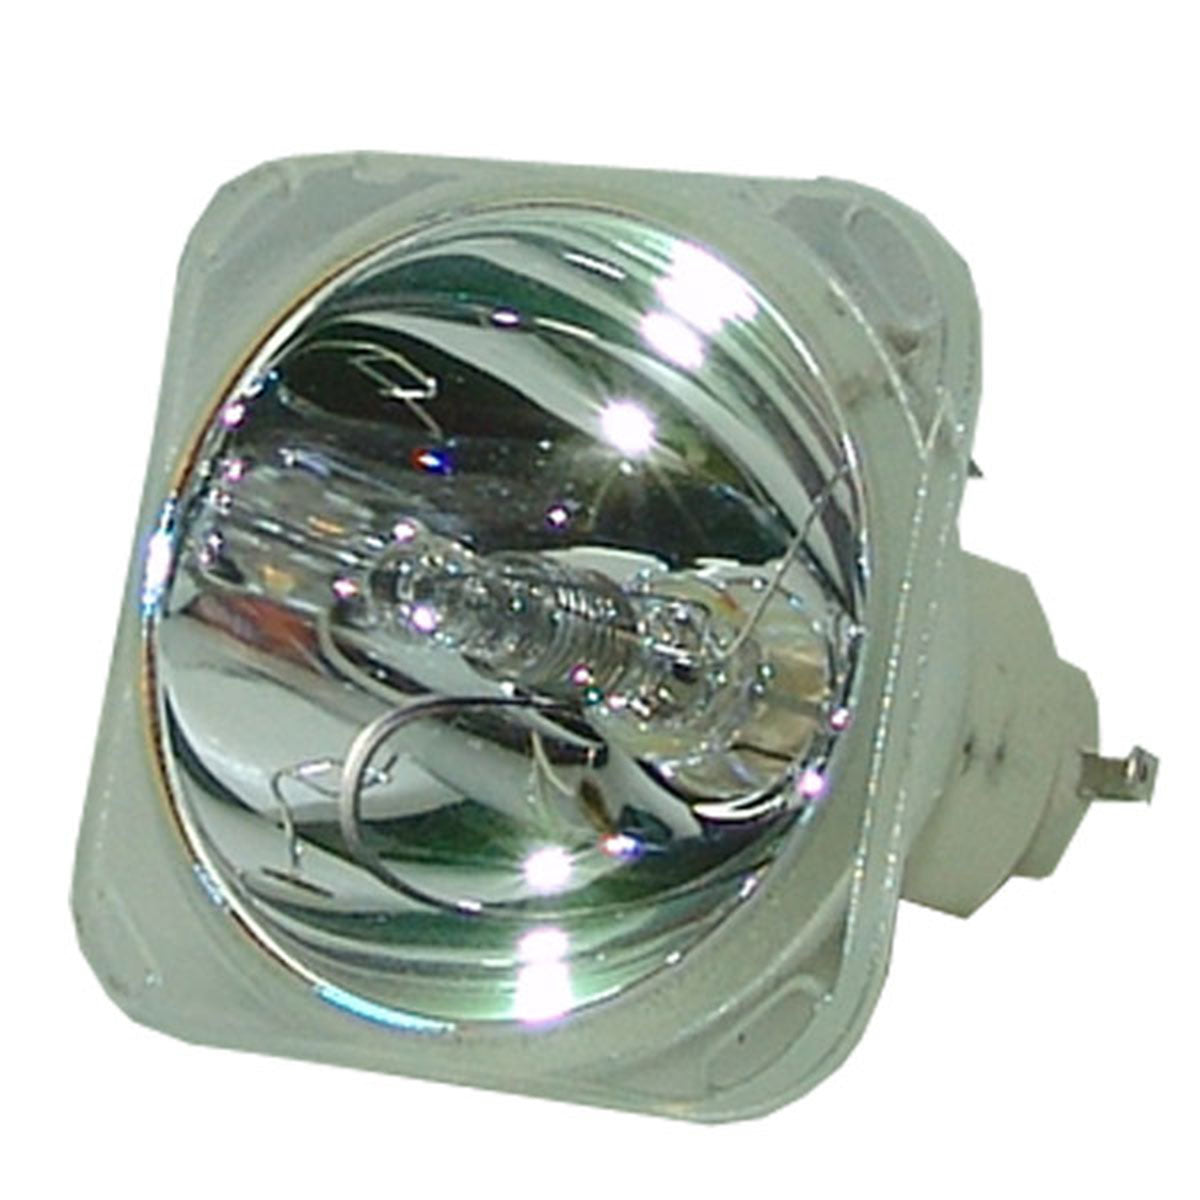 Geha 60-002027 Osram Projector Bare Lamp